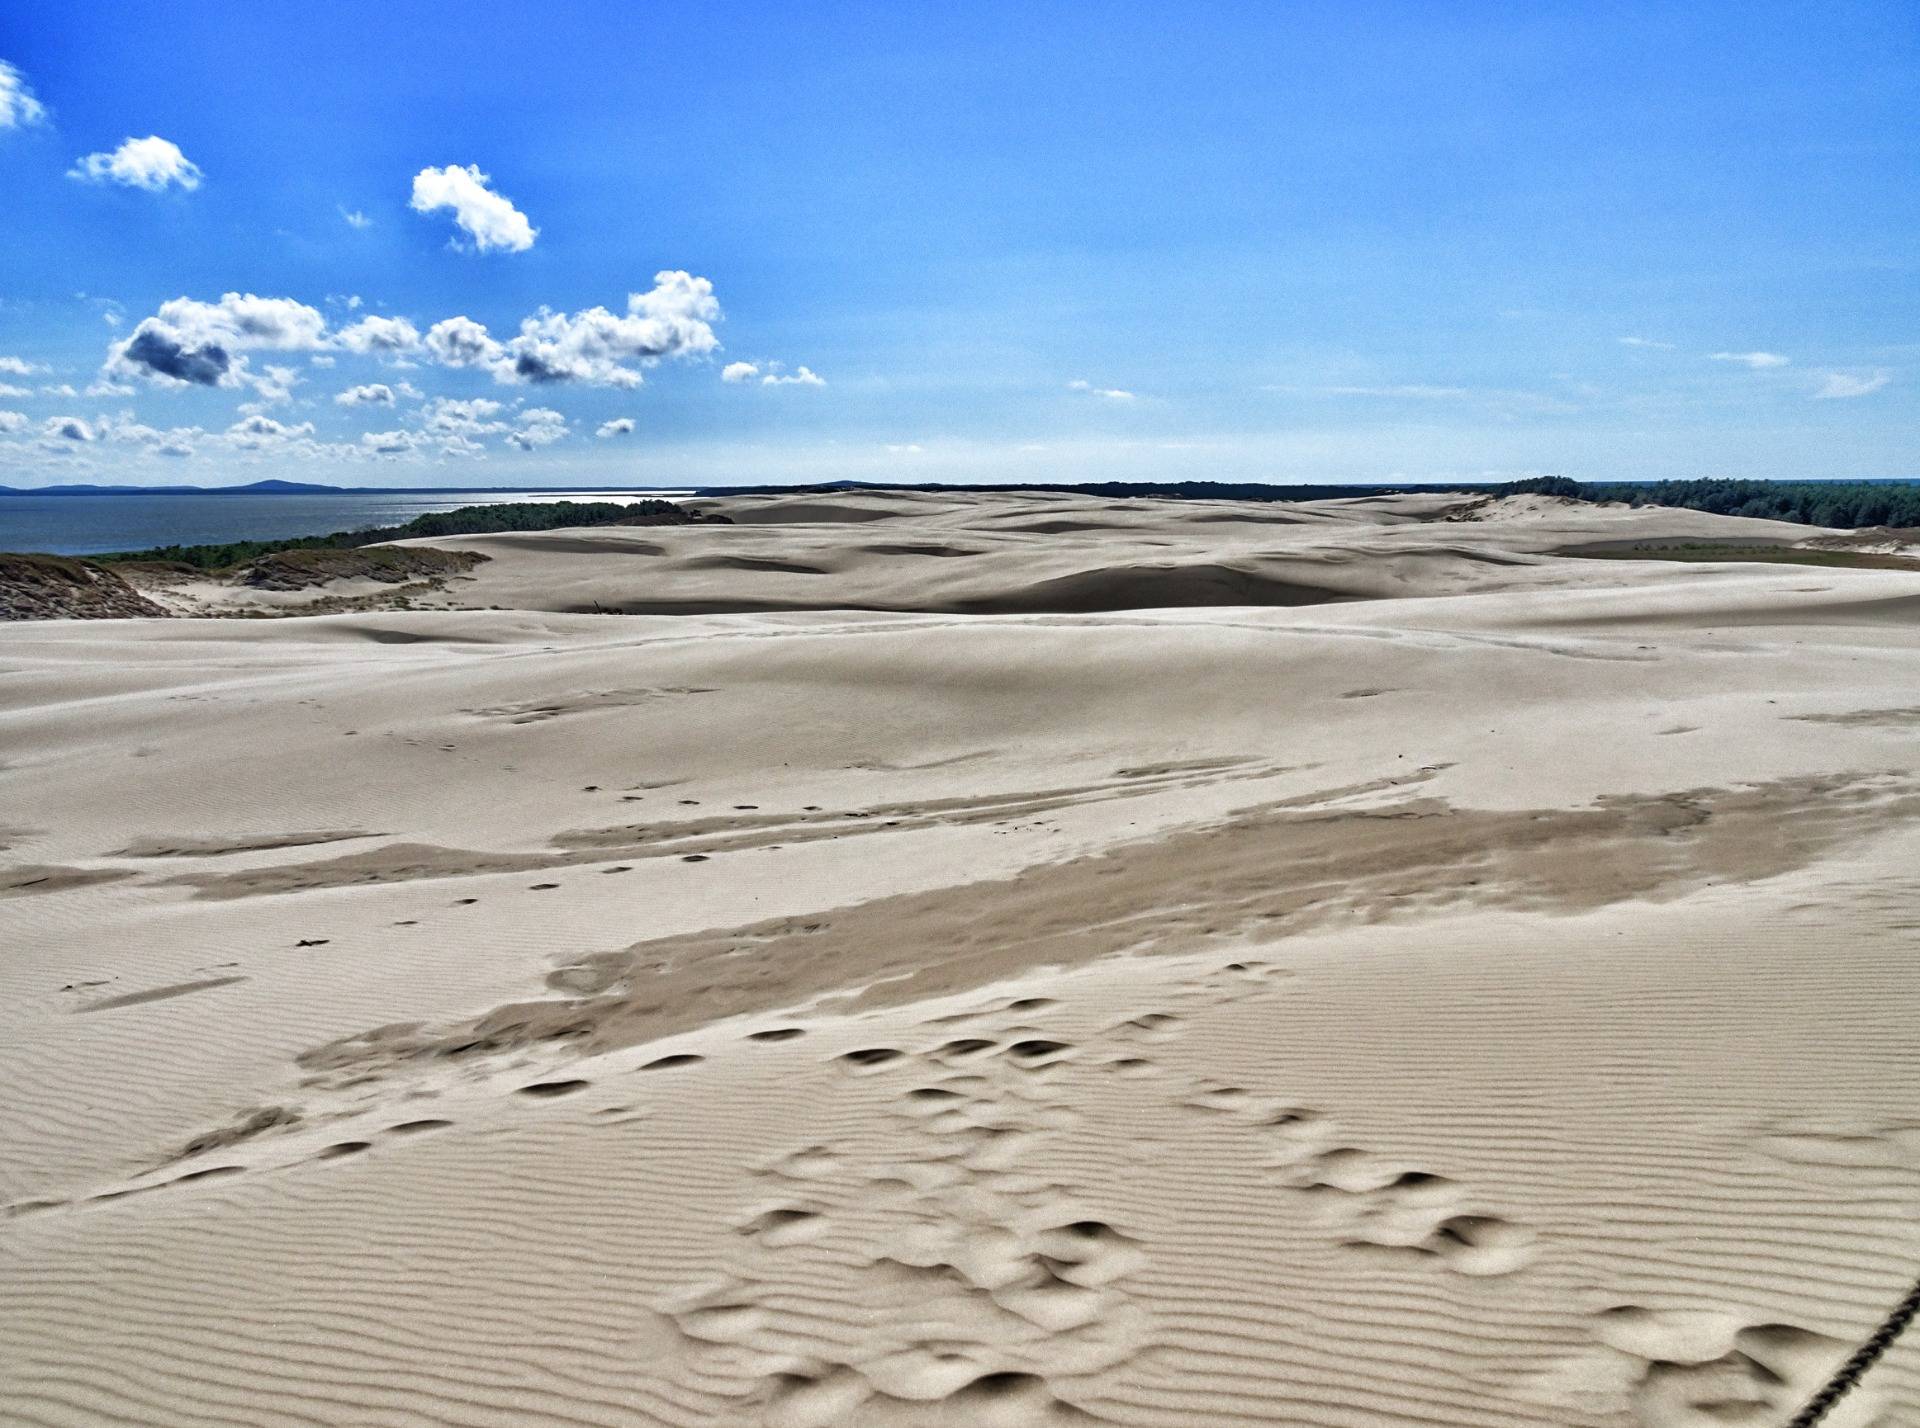 Snow-white sand piles: The magic dunes of Polands Sahara